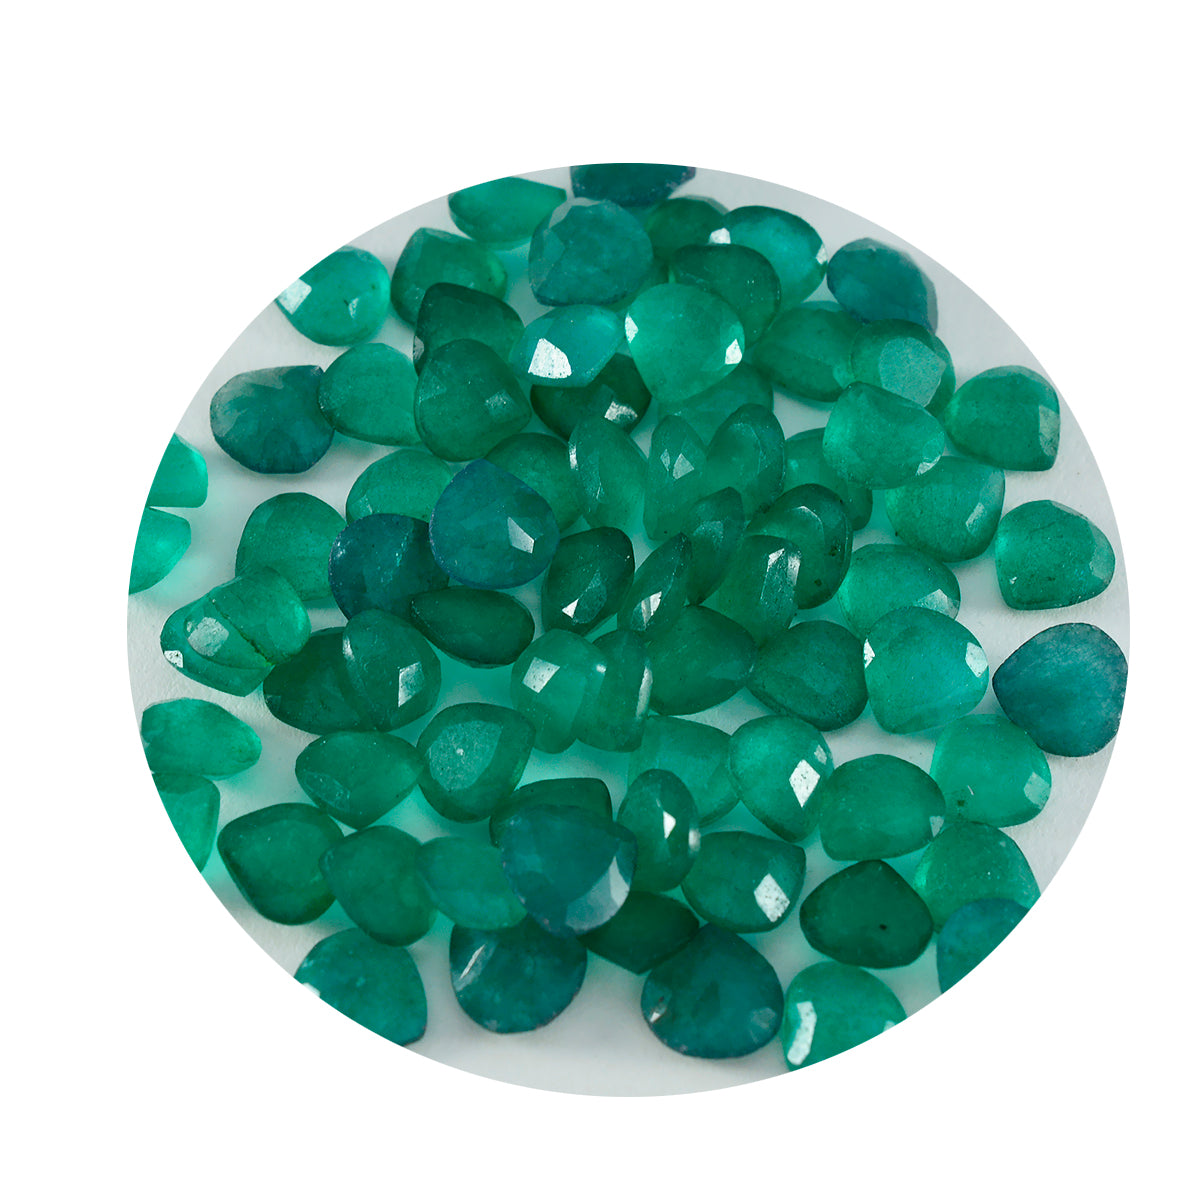 riyogems 1 pezzo di vero diaspro verde sfaccettato 7x7 mm a forma di cuore, gemma sciolta di qualità carina